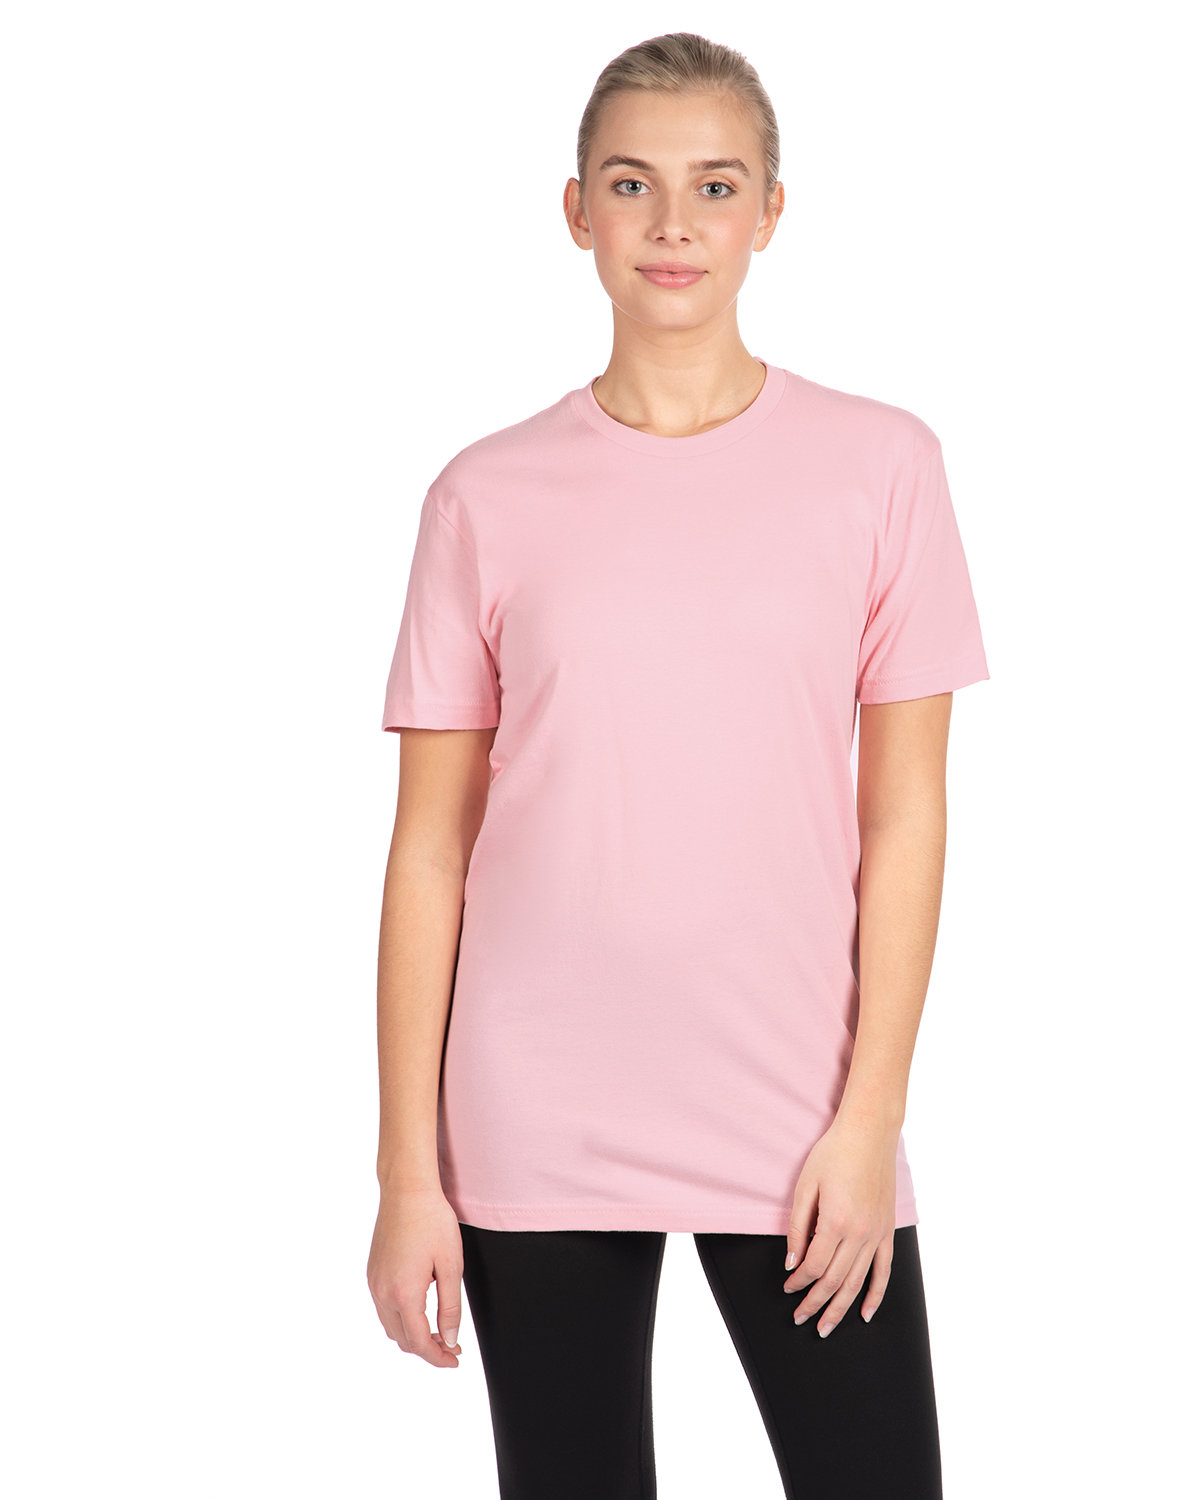 Next Level Unisex Cotton T-Shirt LIGHT PINK 